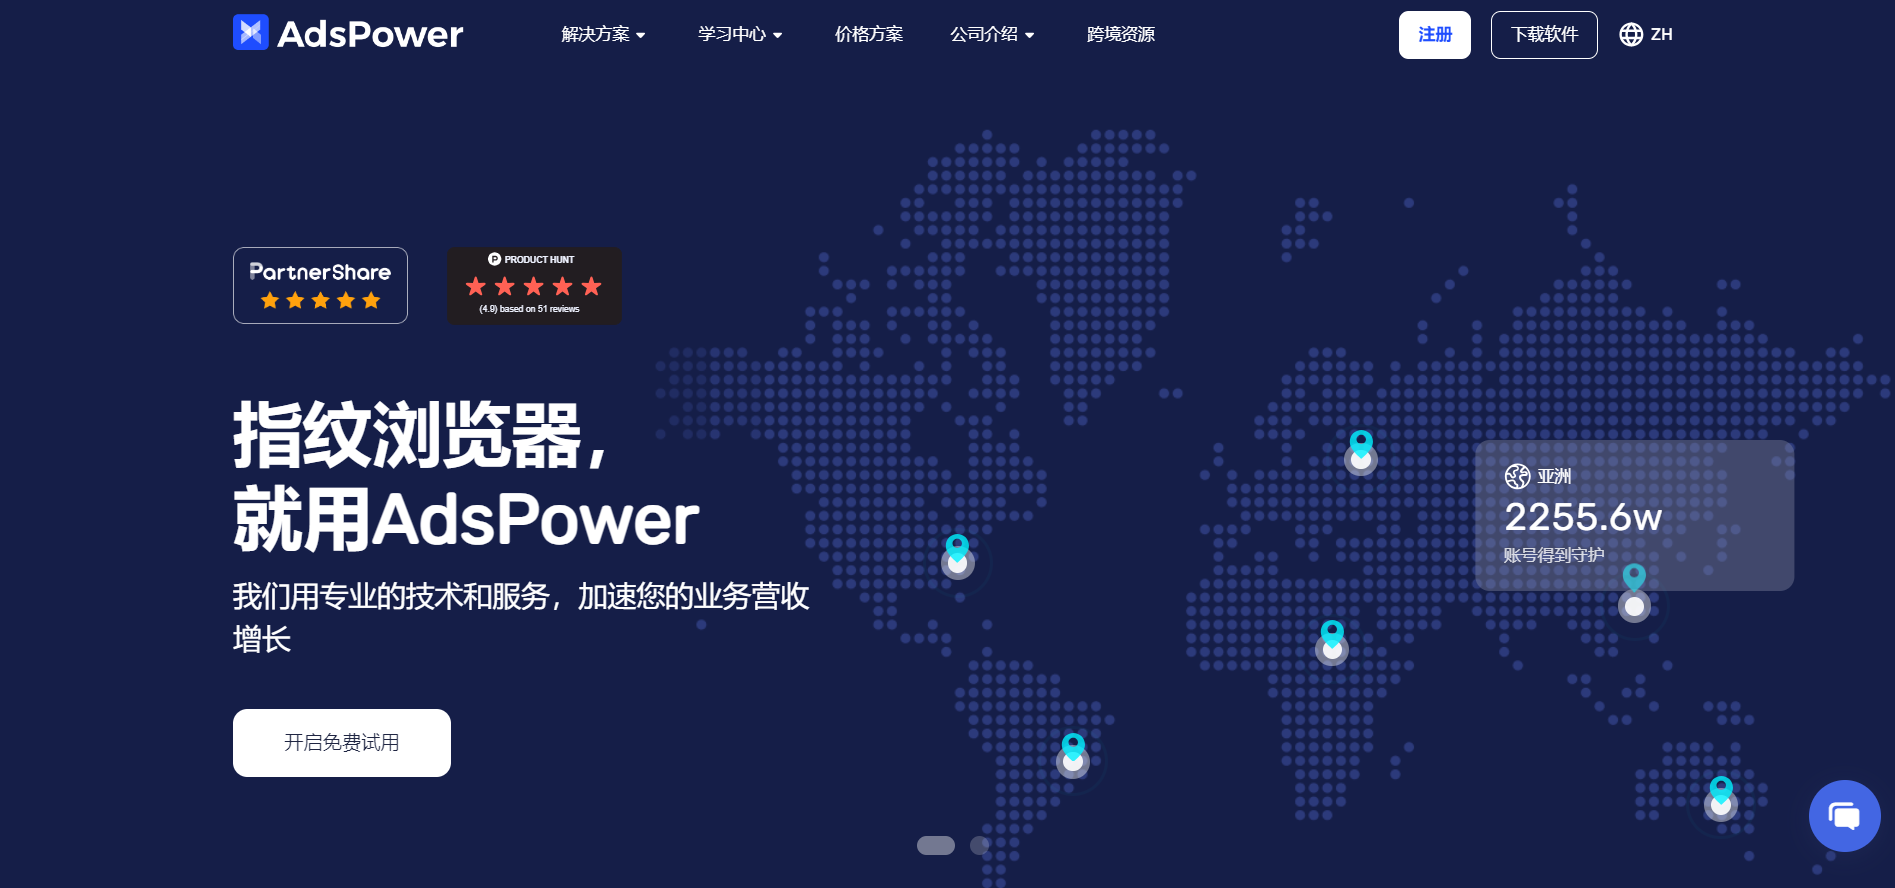 AdsPower指纹浏览器官网封面截图